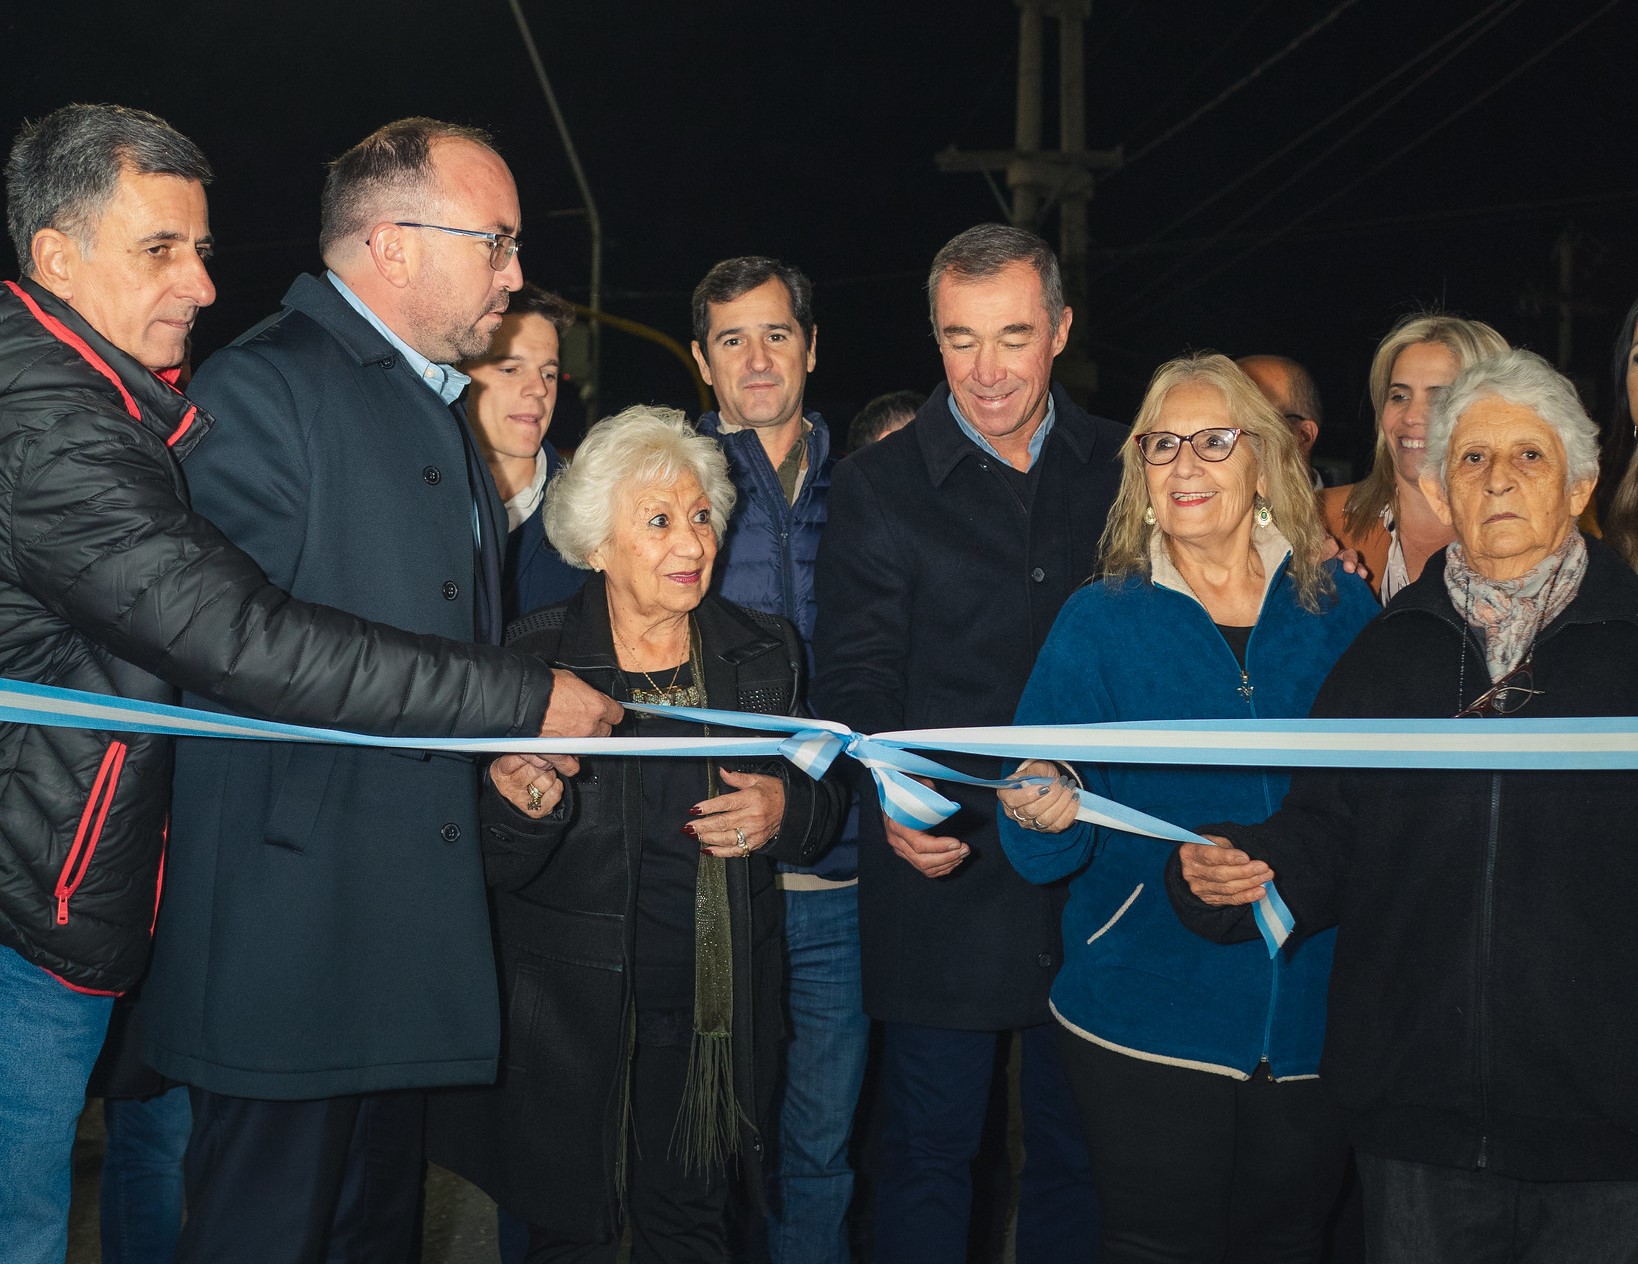 Inauguraron un nuevo portal de ingreso en Rivadavia